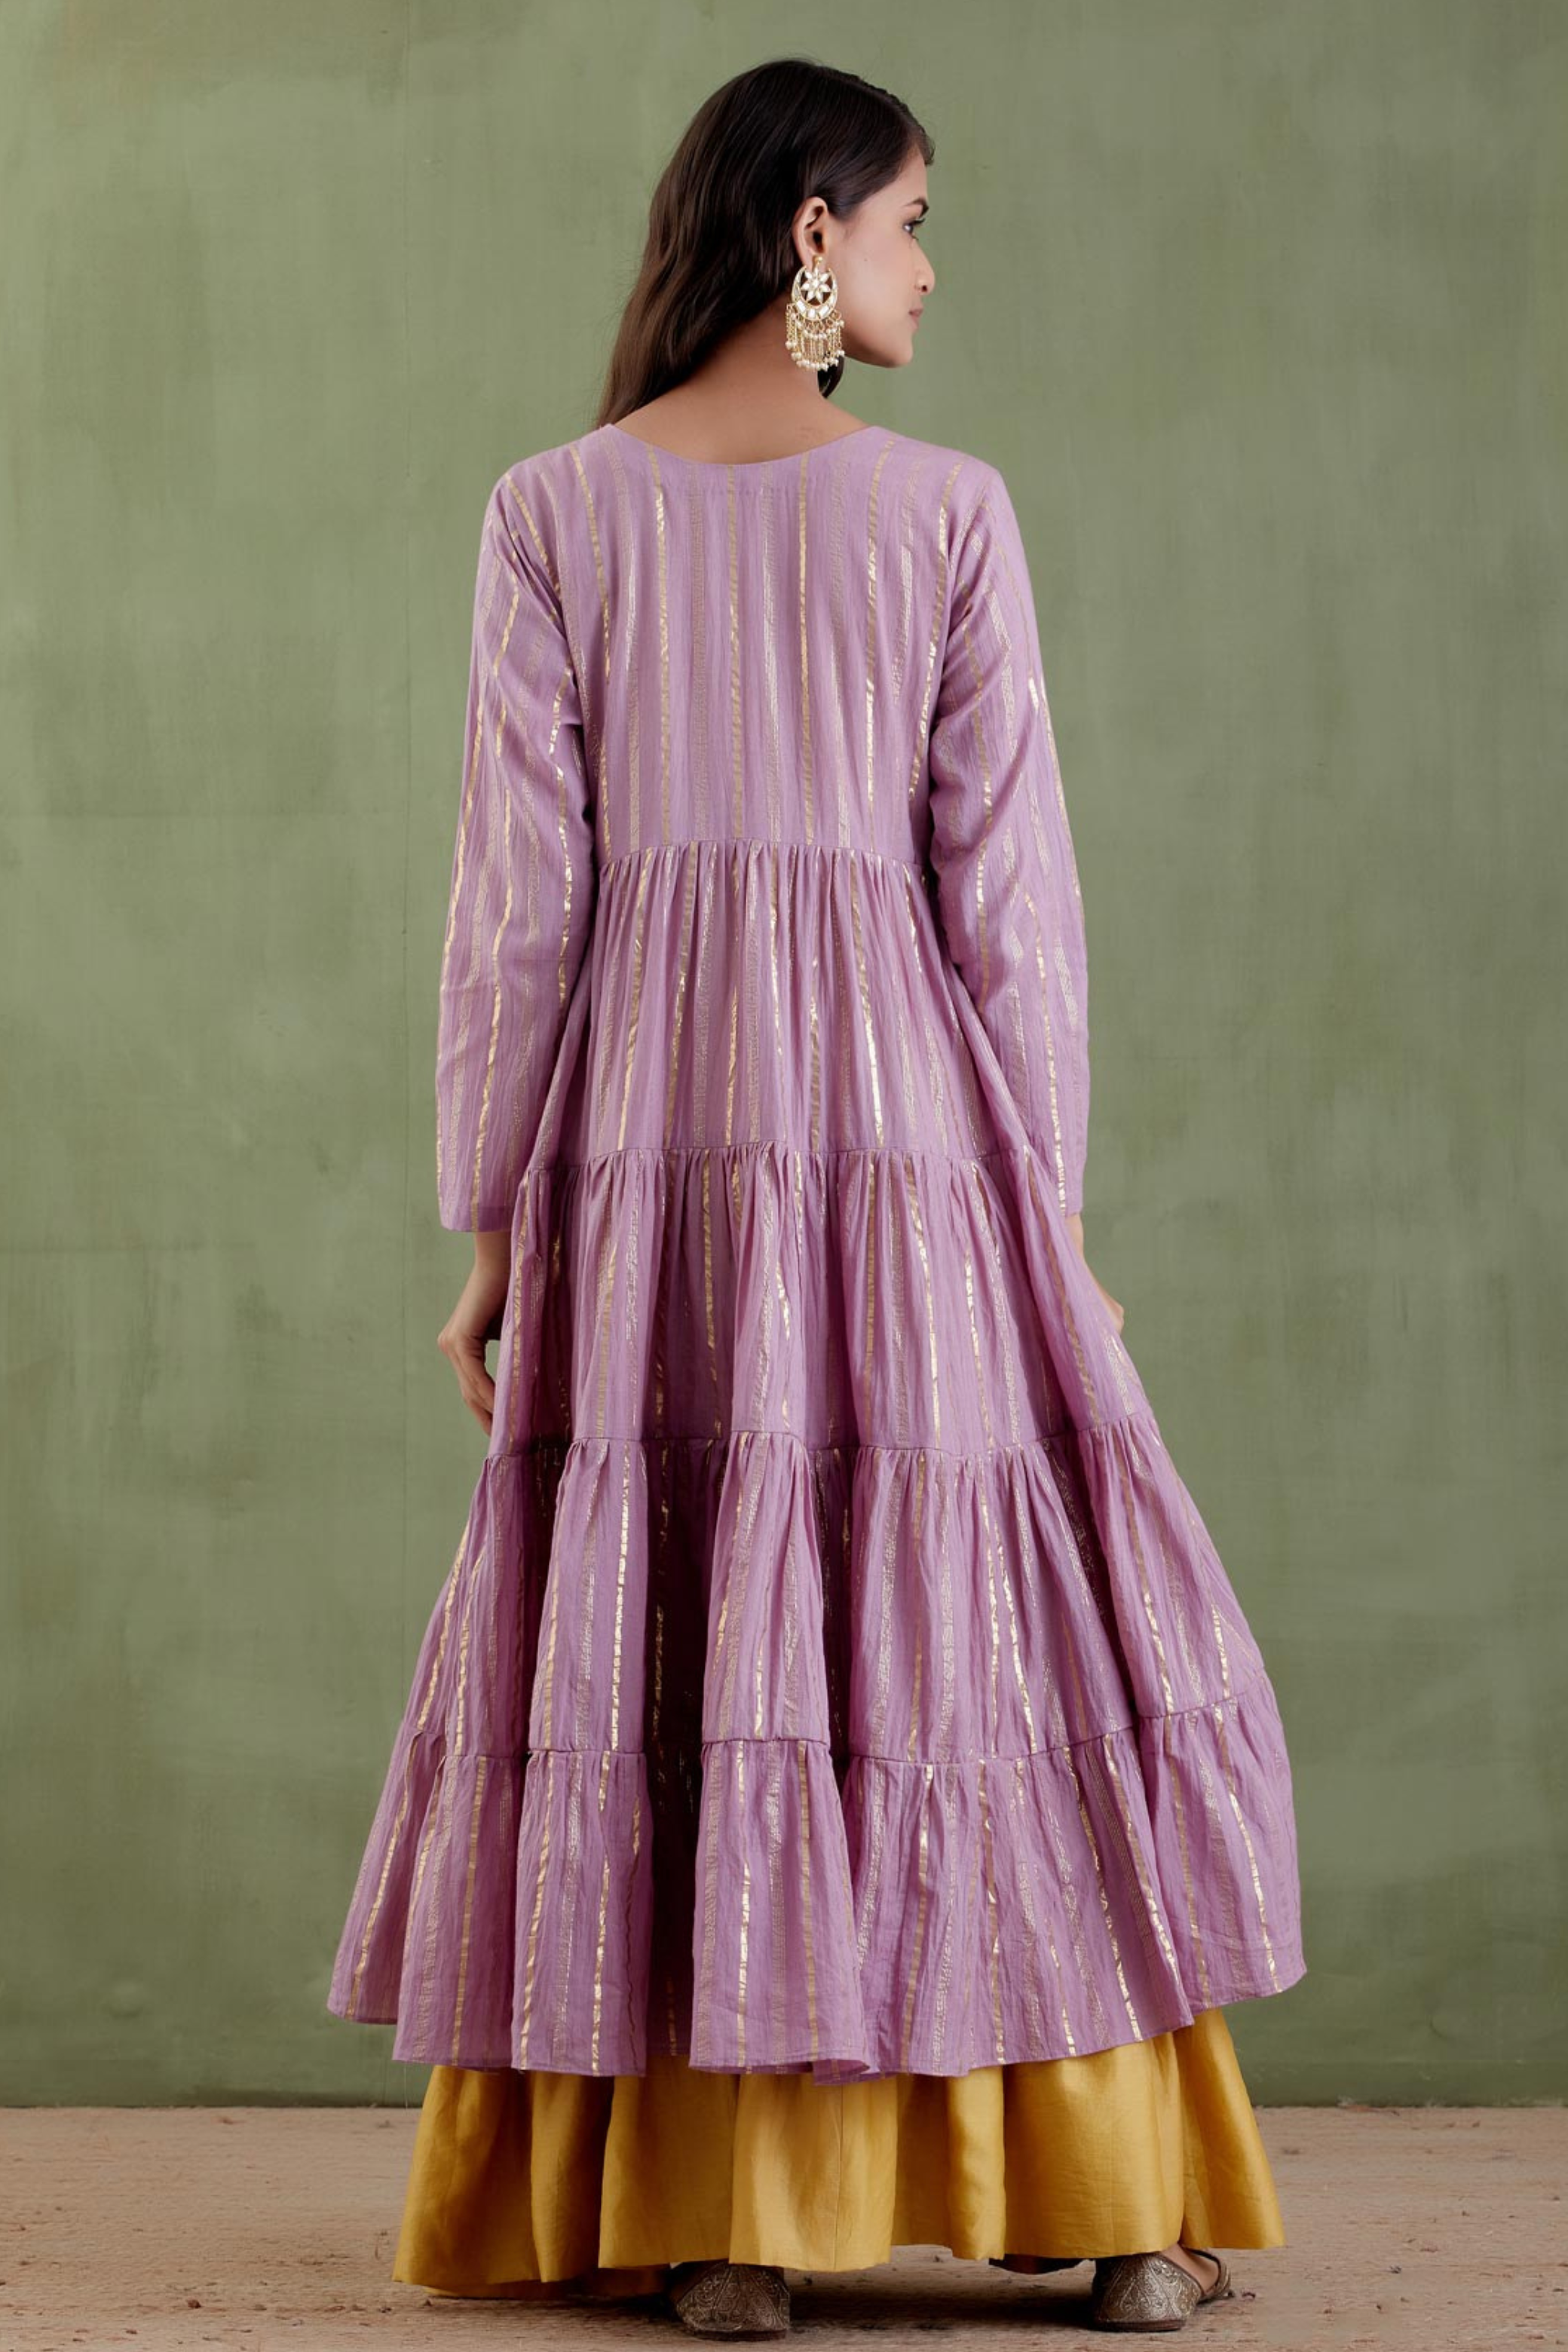 Tiered Lilac Dress